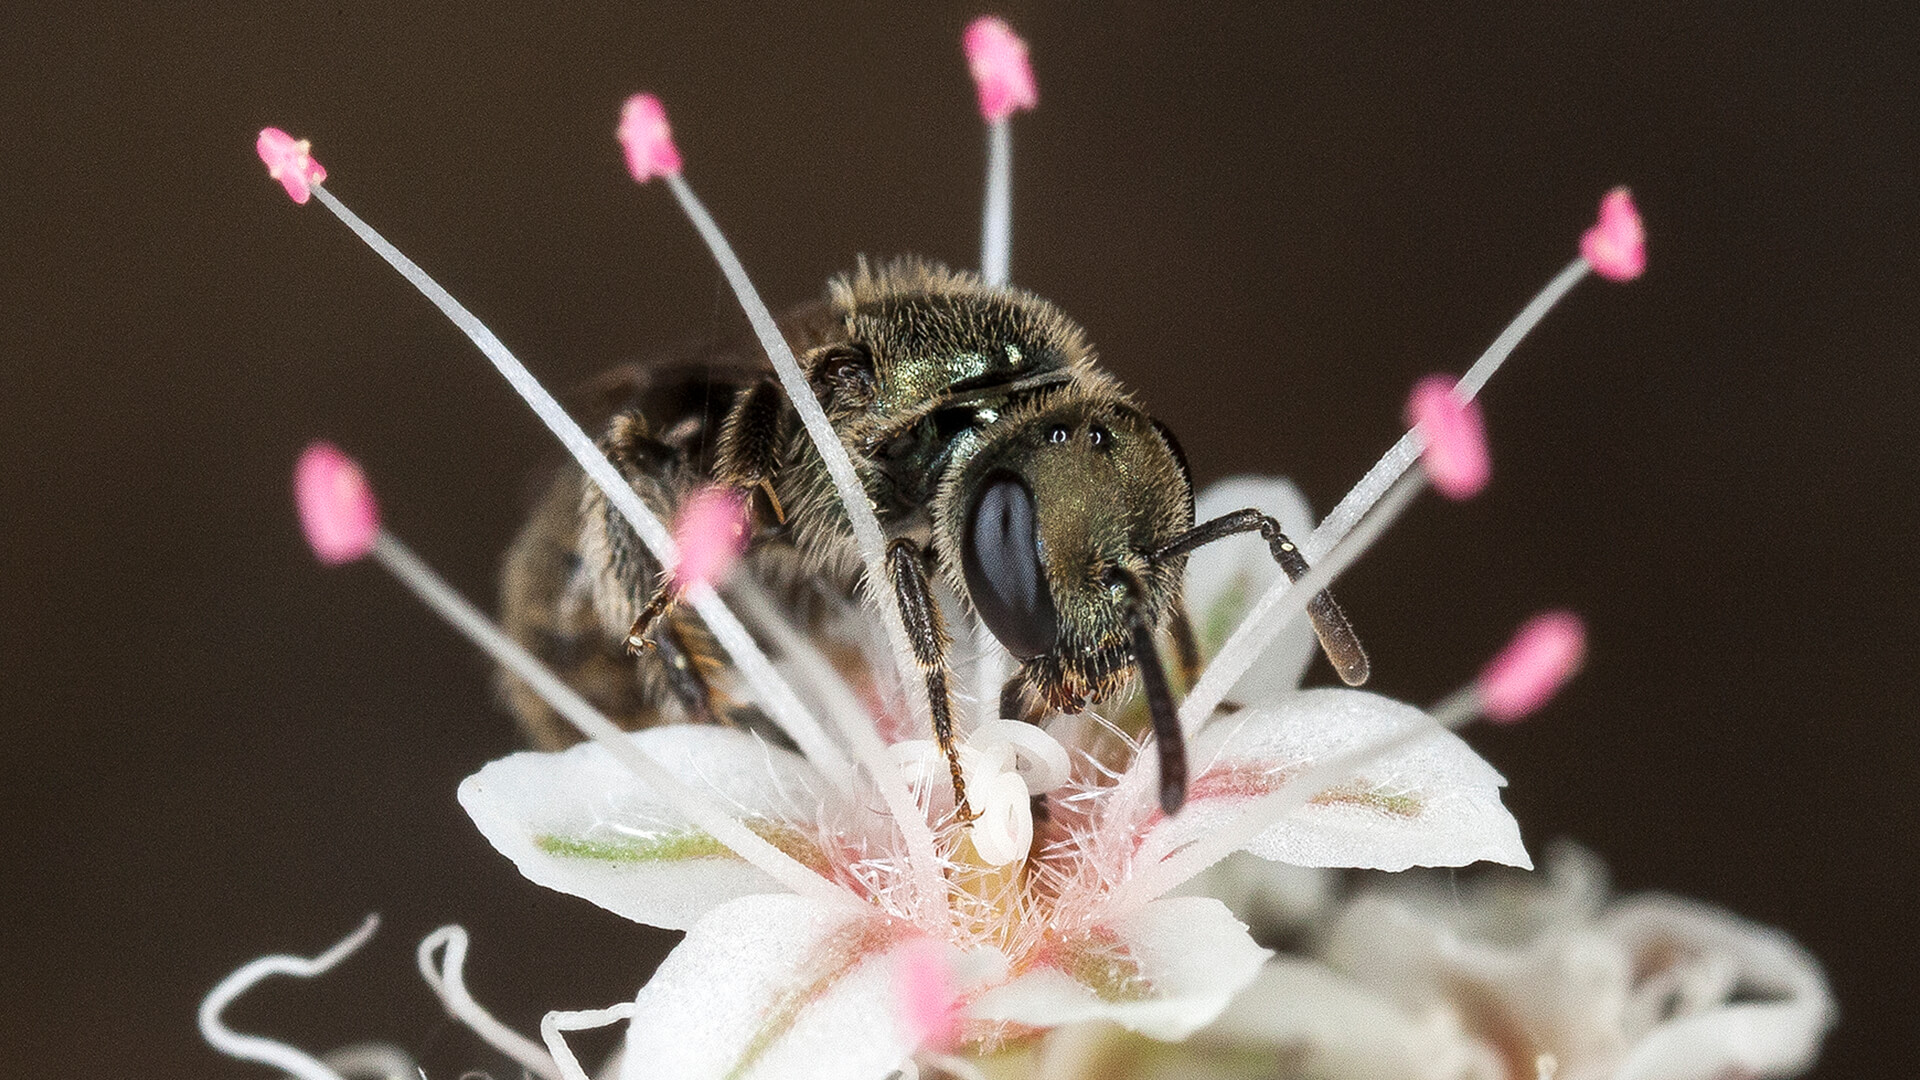 Native California bee